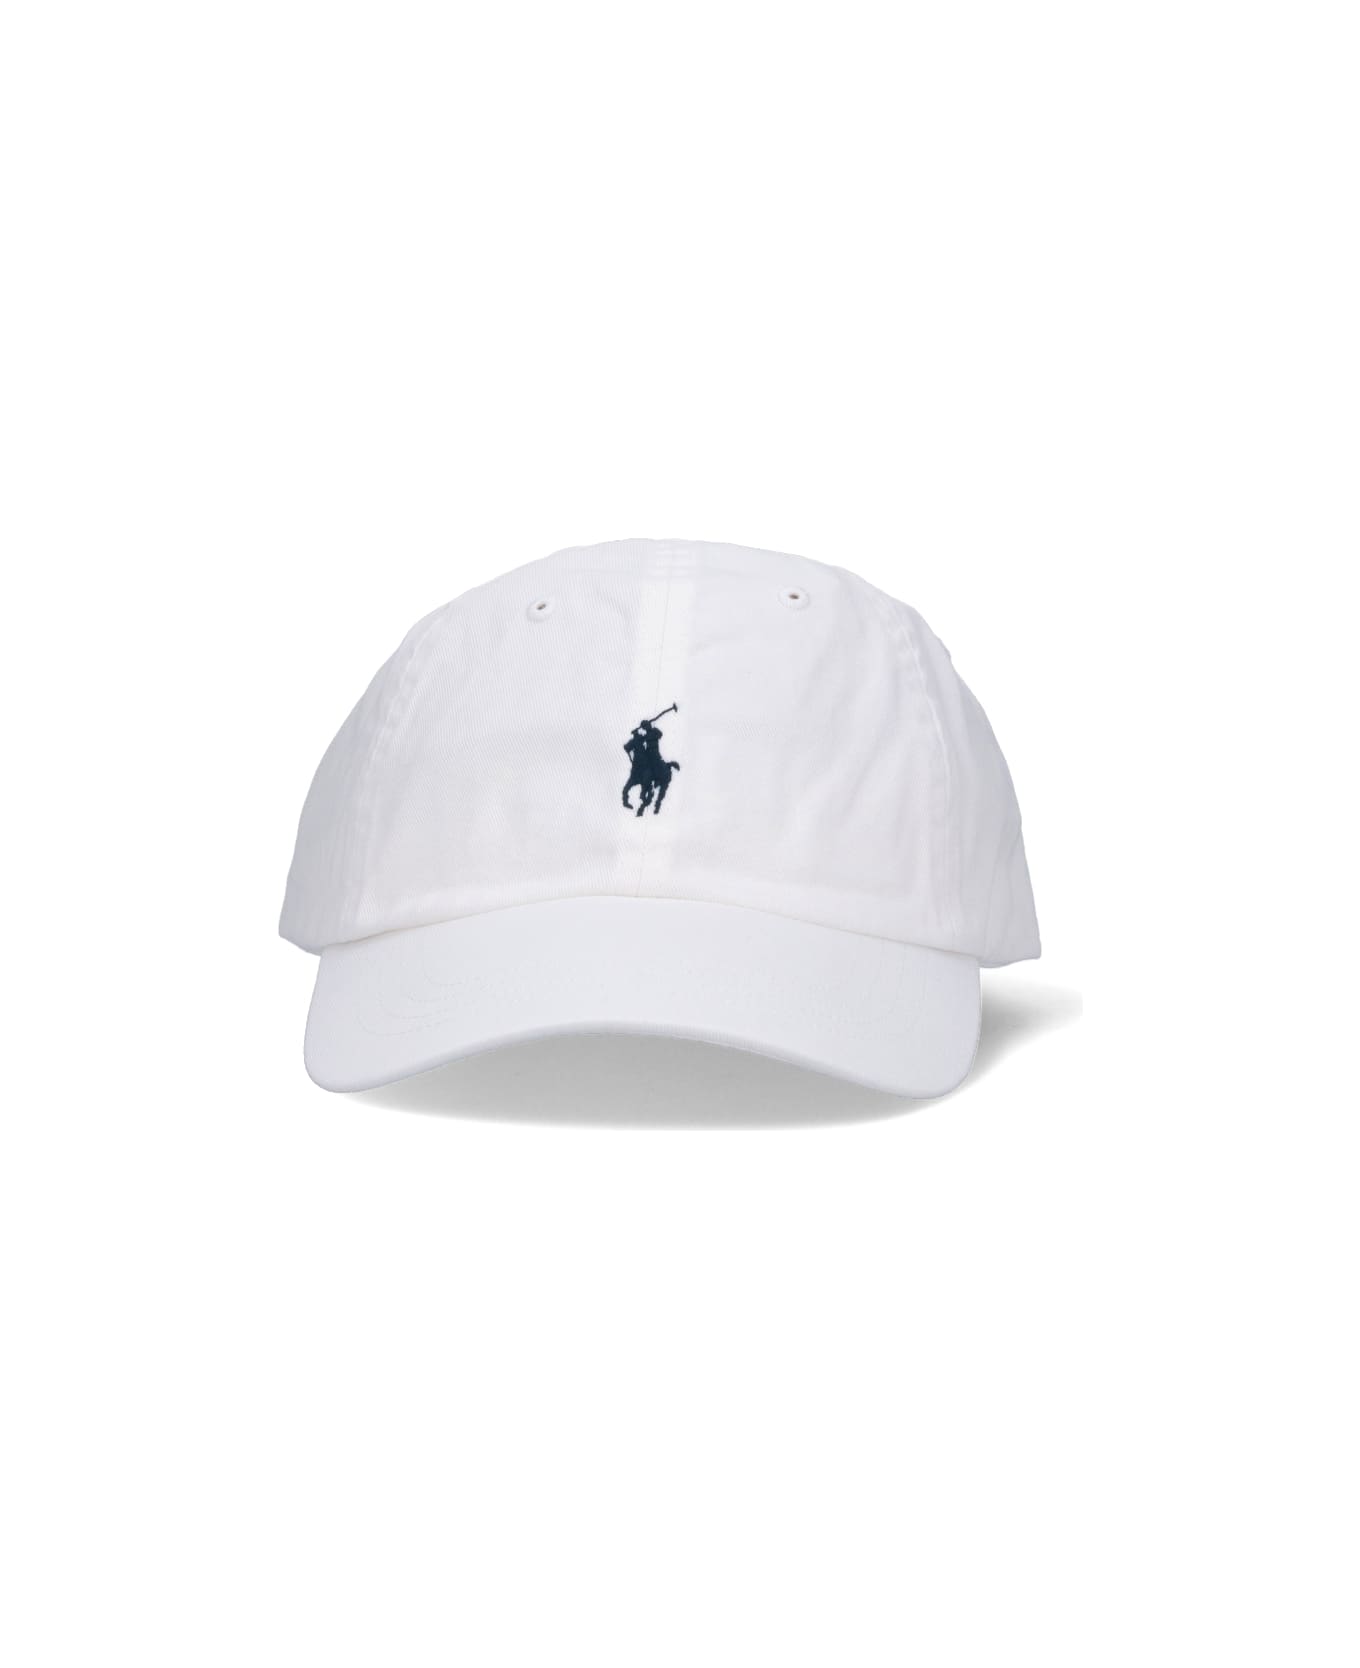 Polo Ralph Lauren Baseball Hat With Pony - White